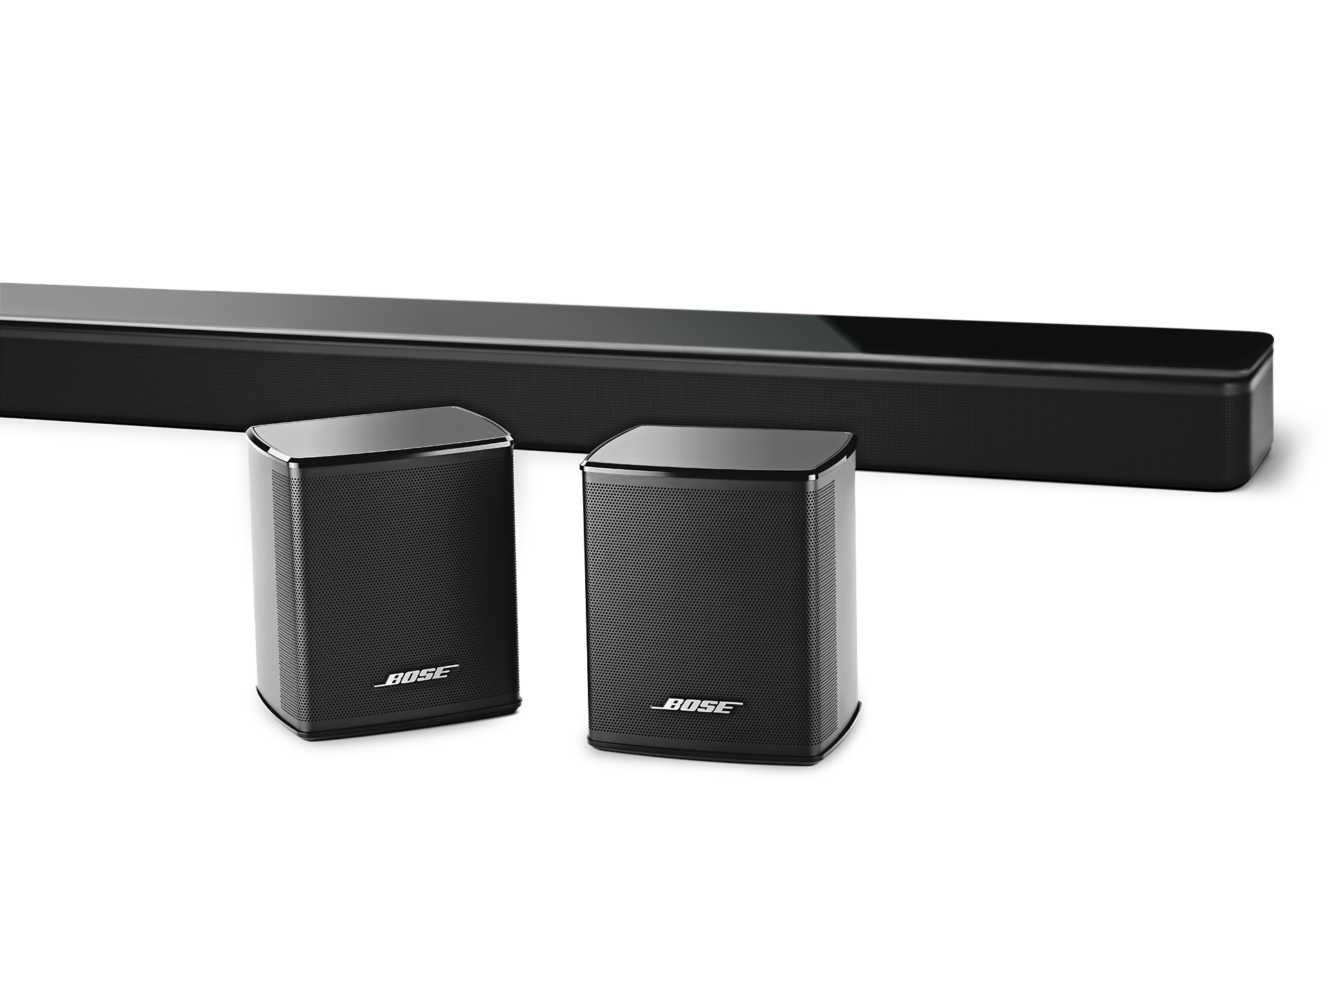 Bose звук. Bose SOUNDTOUCH 300. Аудиосистема Bose® 5.1 Digital Surround с 11 динамиками. Bose Surround Speaker. Акустика Bose am-1200.